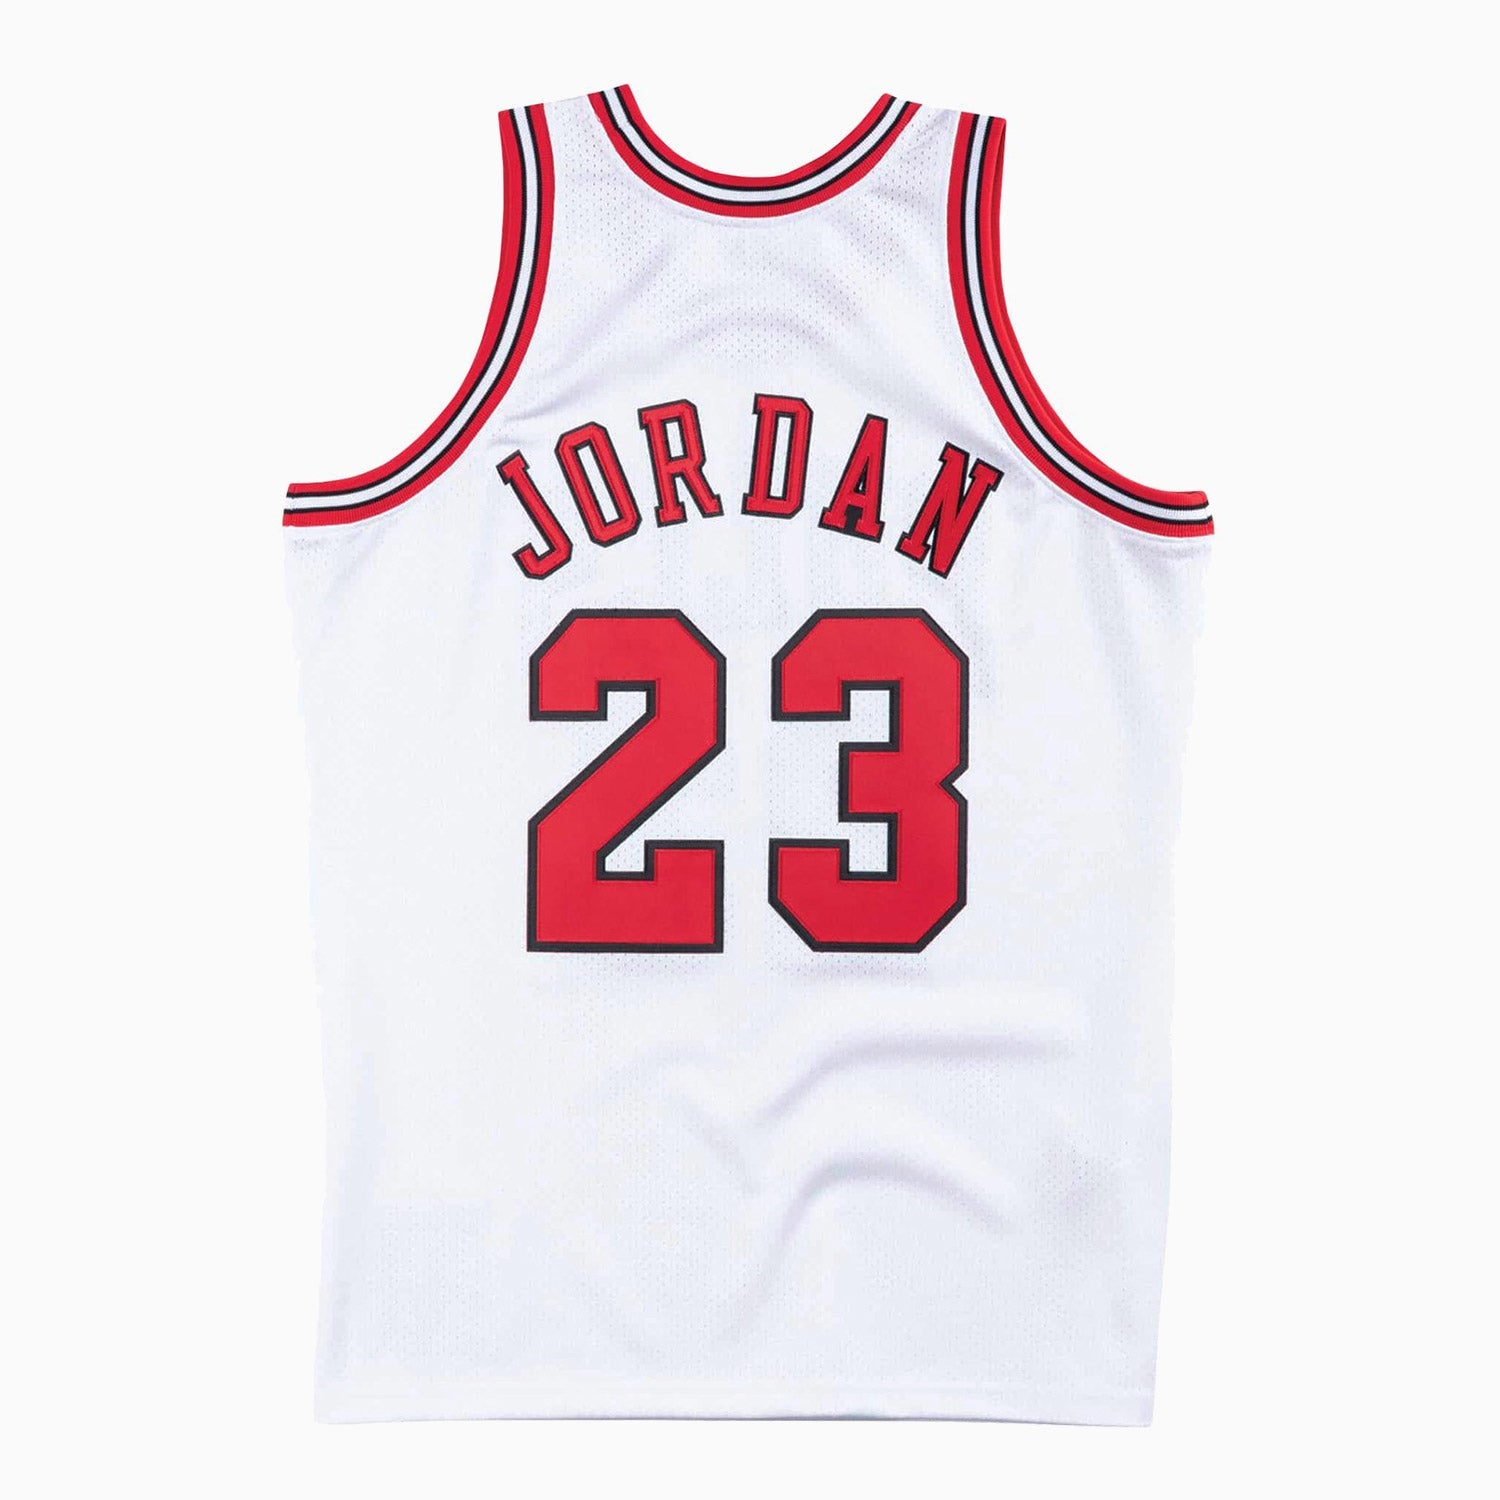 Chicago Bulls Authentic Mitchell & Ness Michael Jordan 1995-96